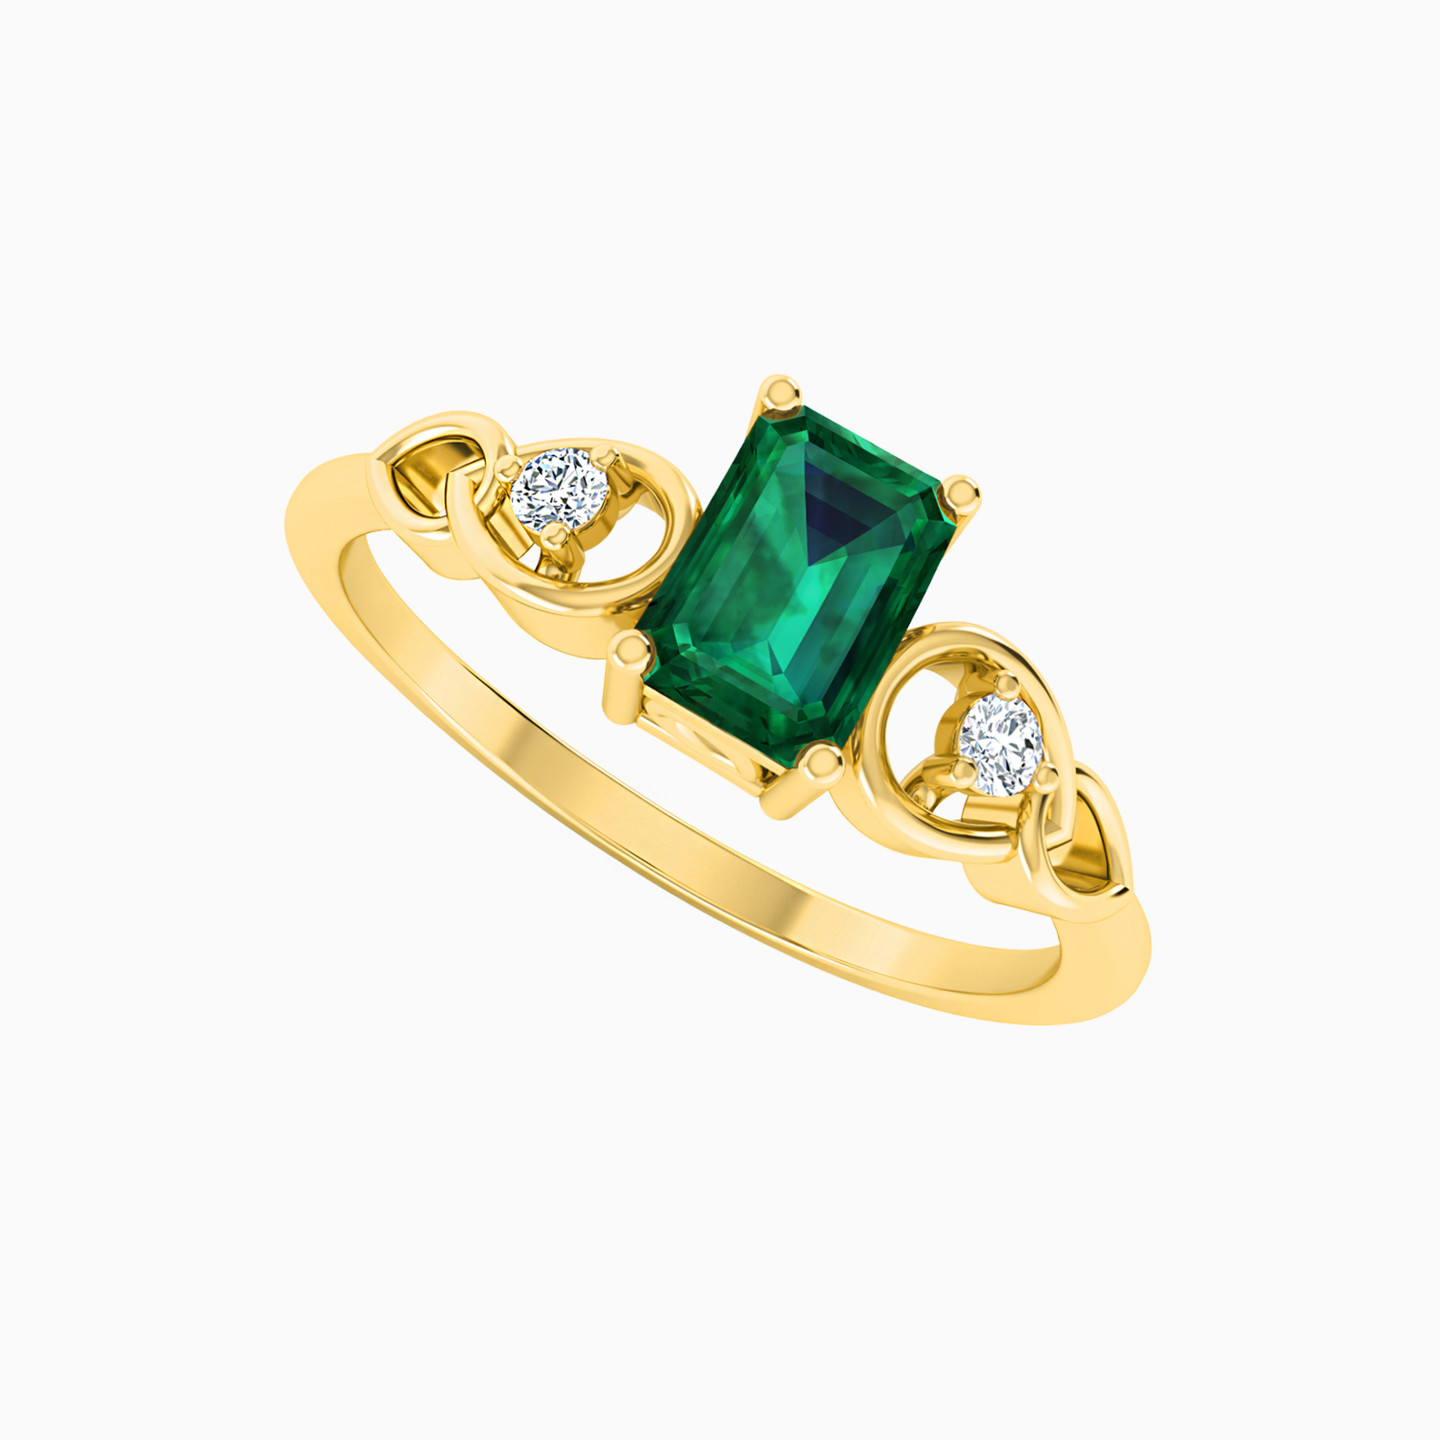 18K Gold Diamond & Colored Stones Statement Ring - 2